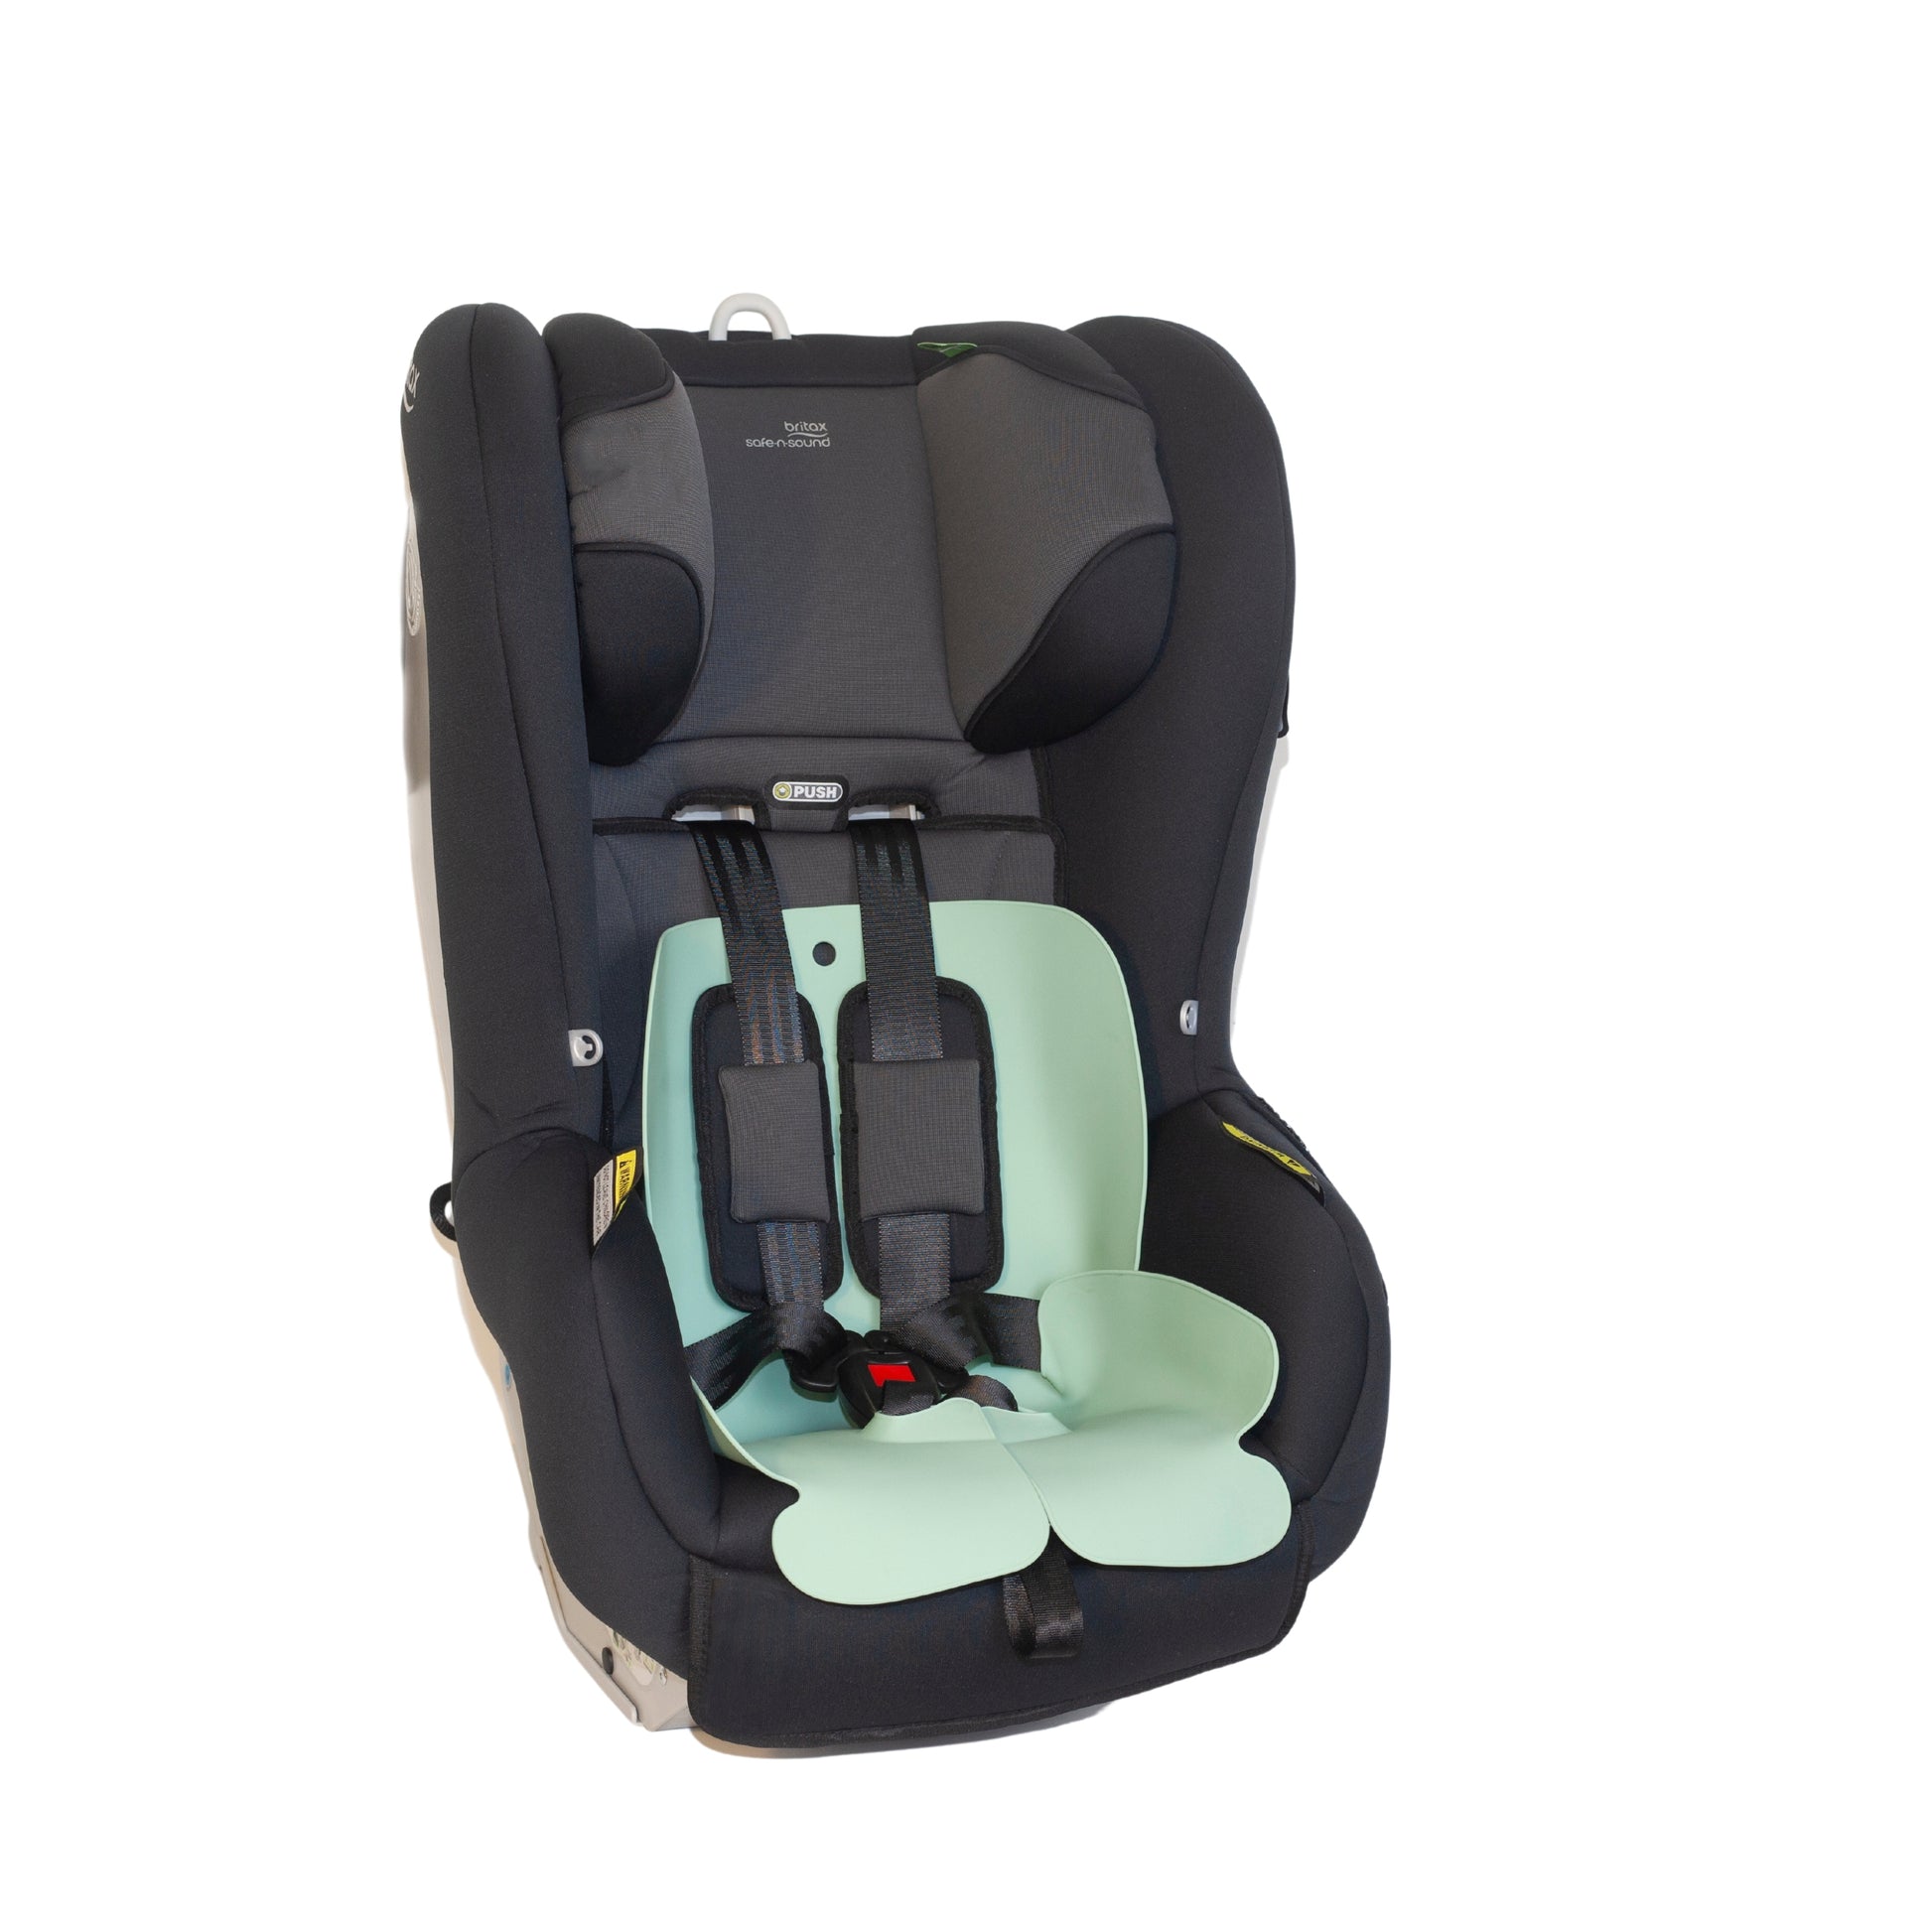 Sande Kids™ Waterproof Car Seat and Pram Liner in Seafoam Green. Shown in a children's forward-facing harnessed car seat.